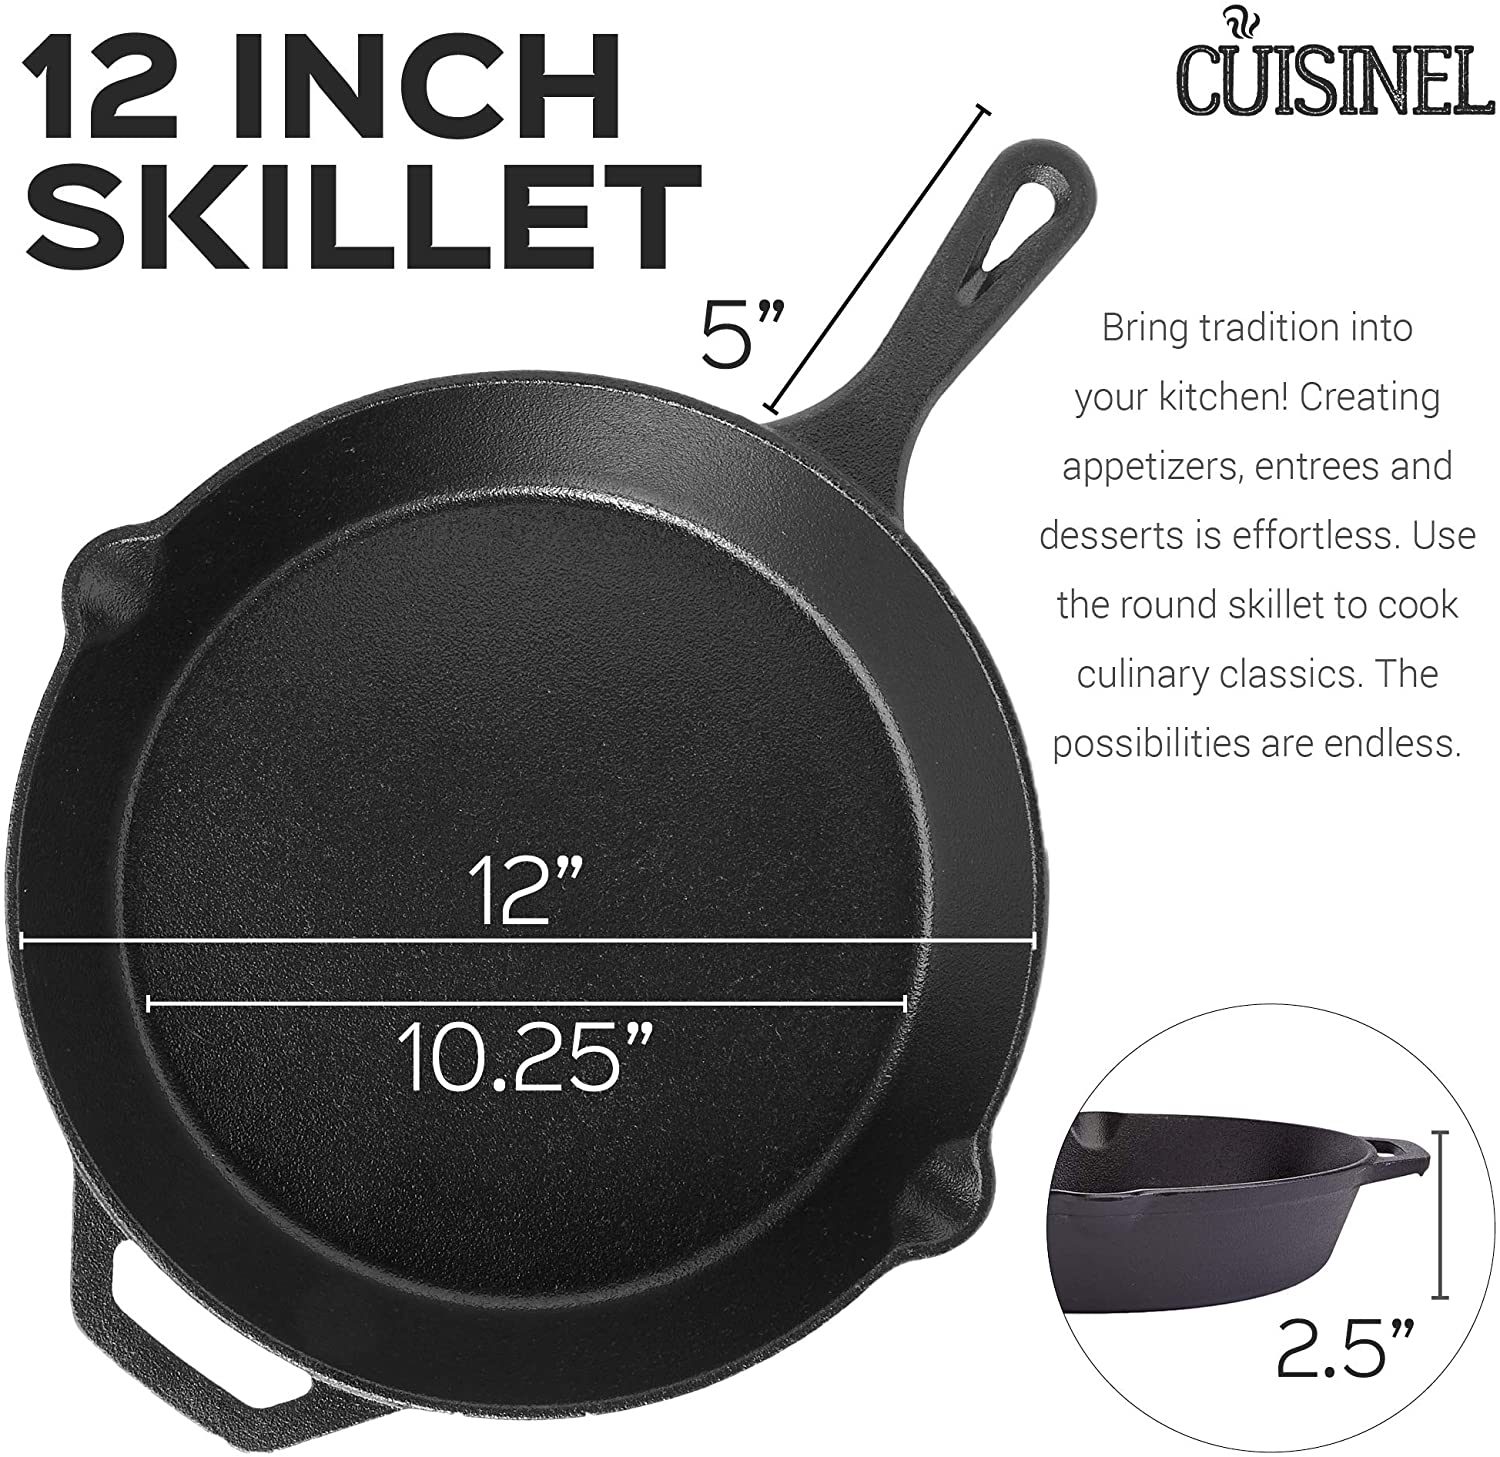 Cuisinel Cast Iron Skillet Review